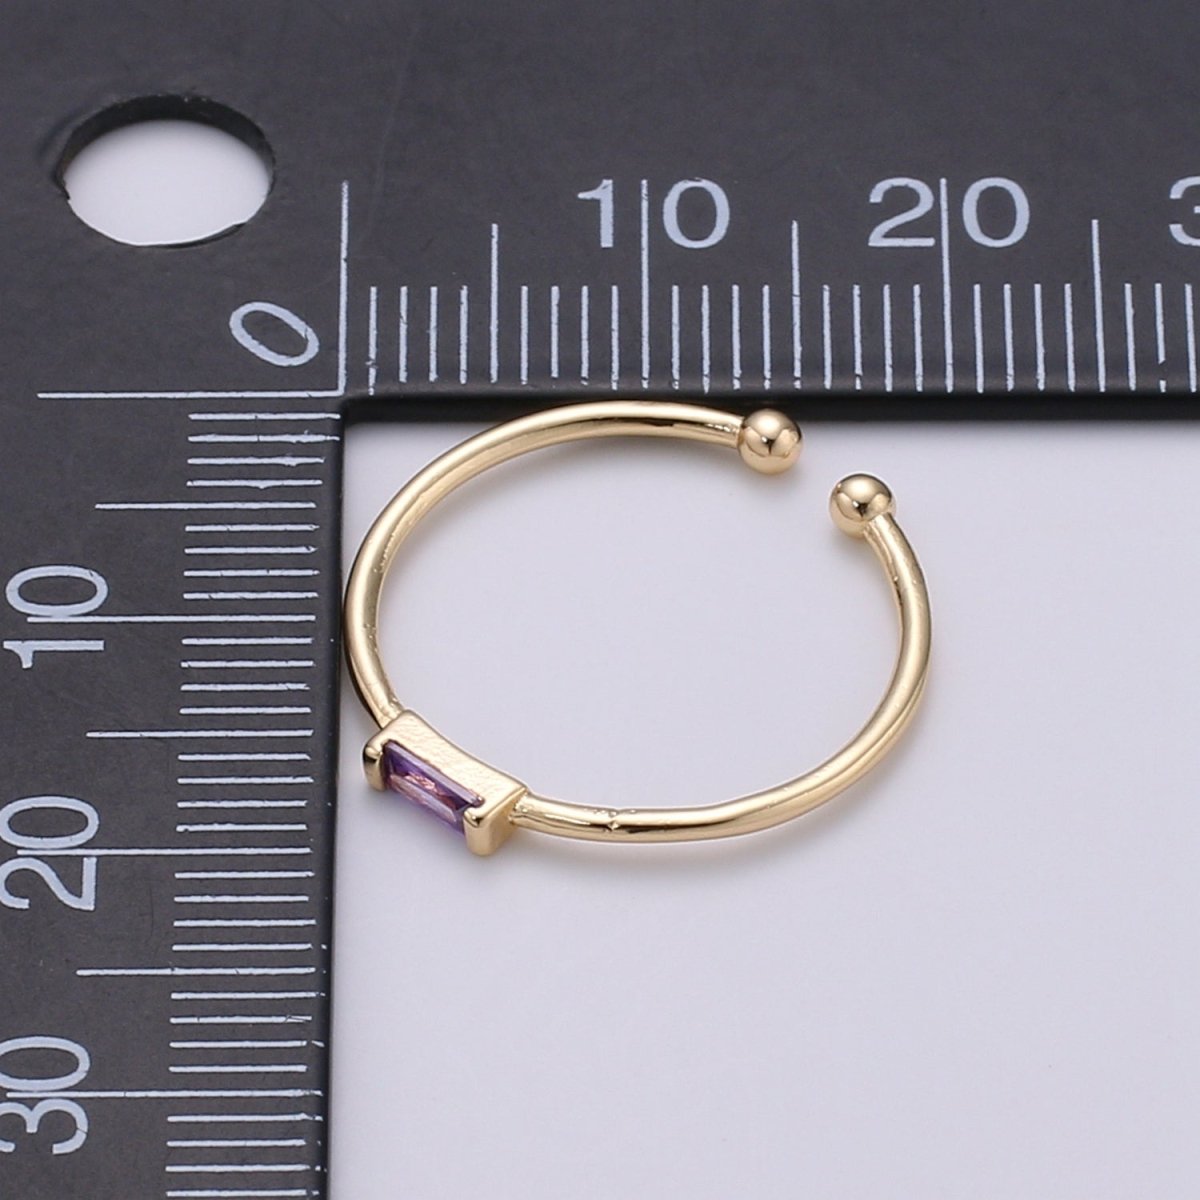 Minimalist Birthstone Ring • Cz Ring in Gold • Dainty Birthstone Ring • Stacking Ring • Valentine Gifts for Mom Wife Friend R-215 R-216 R-218 R-219 R-220 R-223 R-225 - DLUXCA